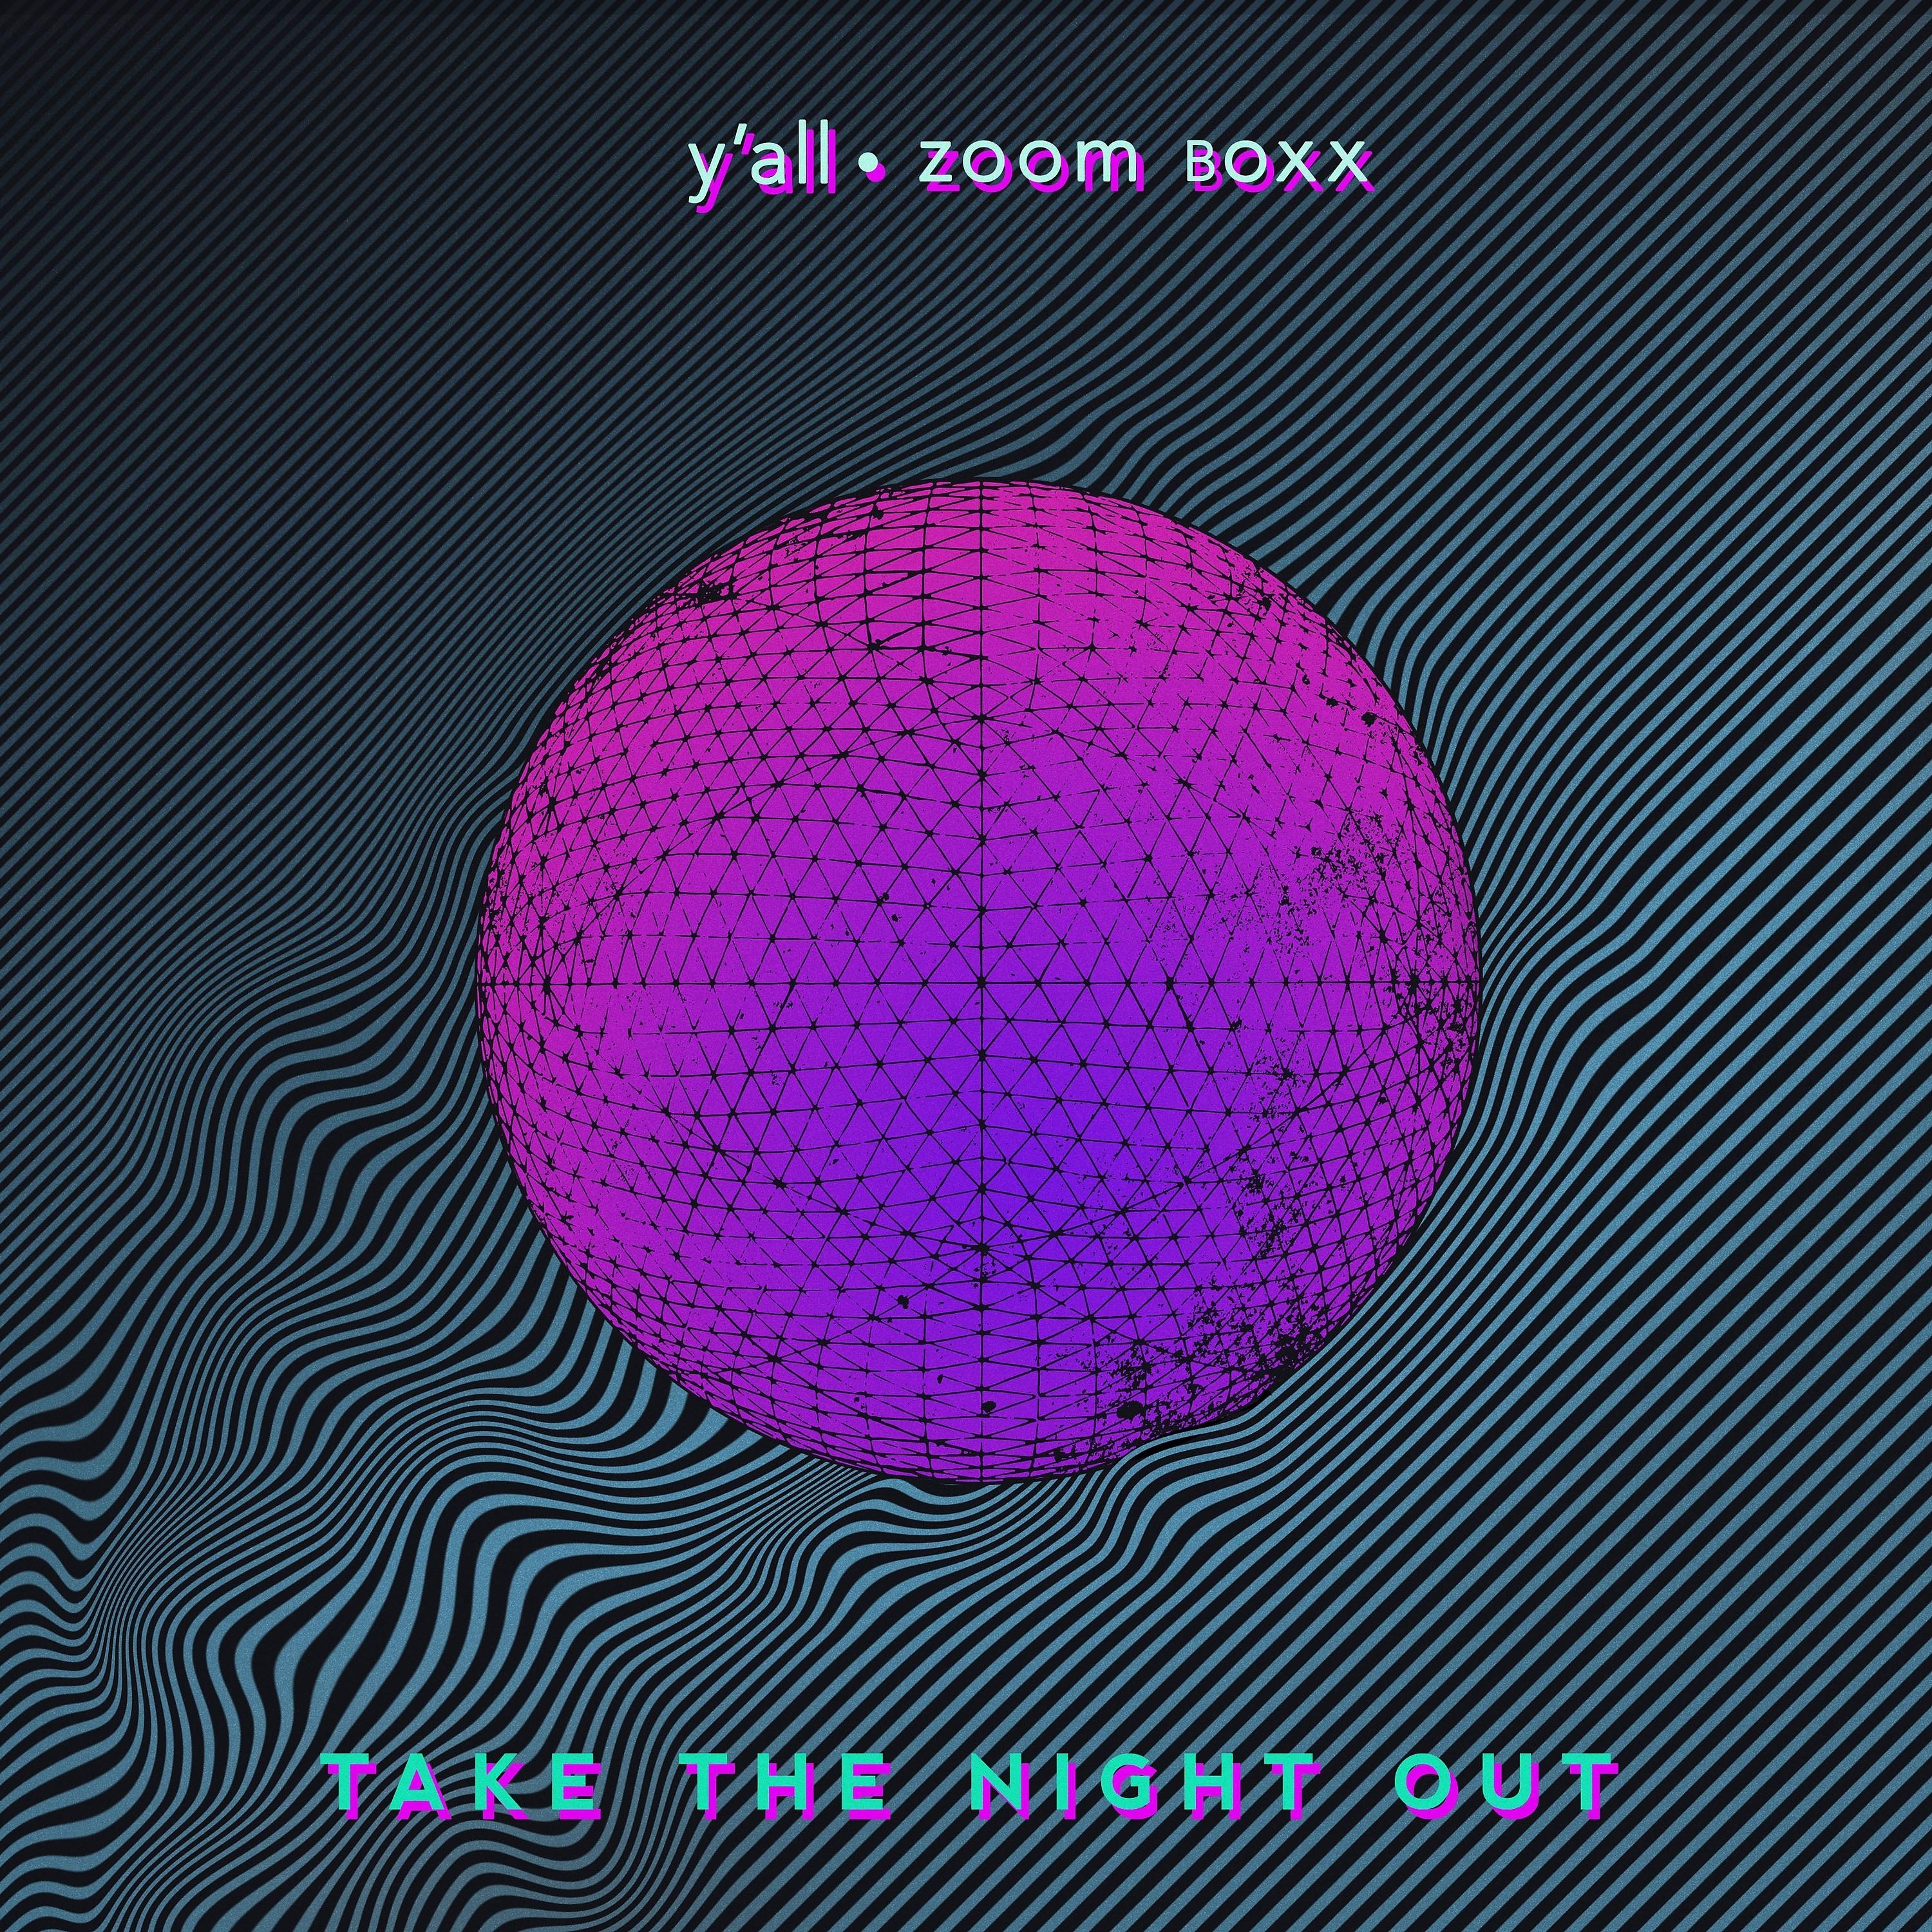 Постер альбома Take the Night